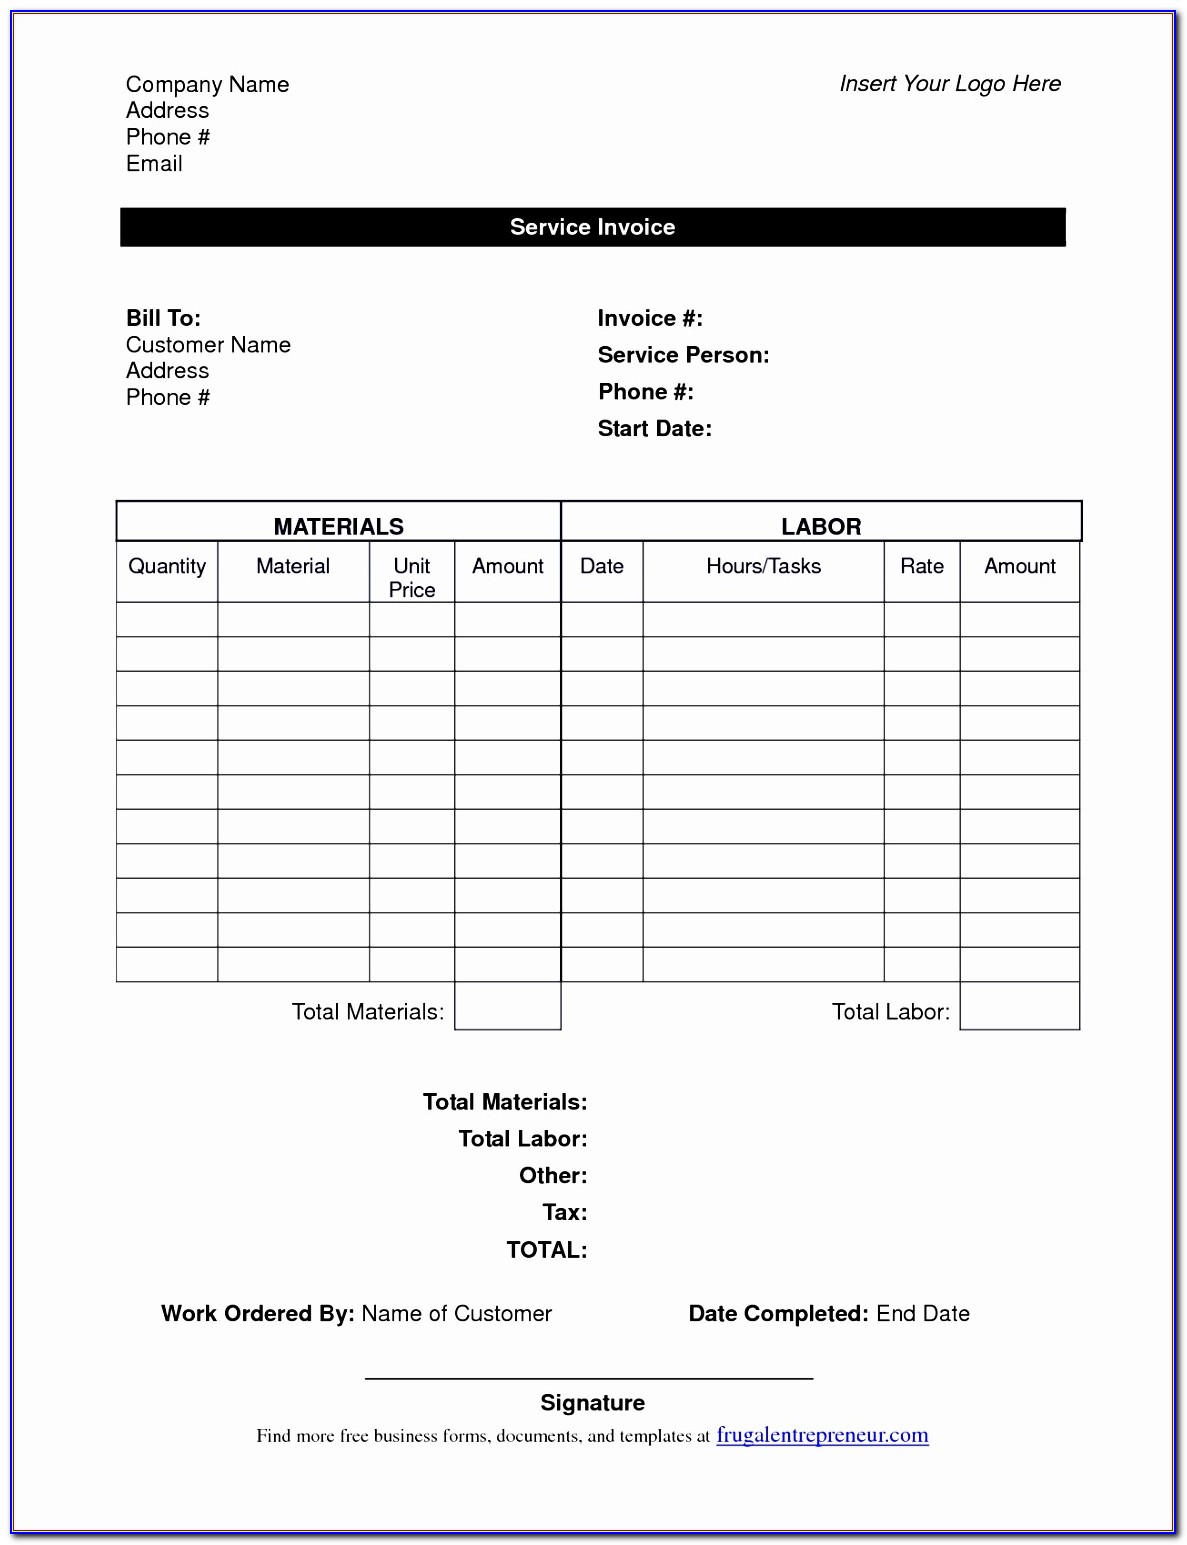 Service Invoice Template Excel Sgjpm New Labor Invoice Template Free